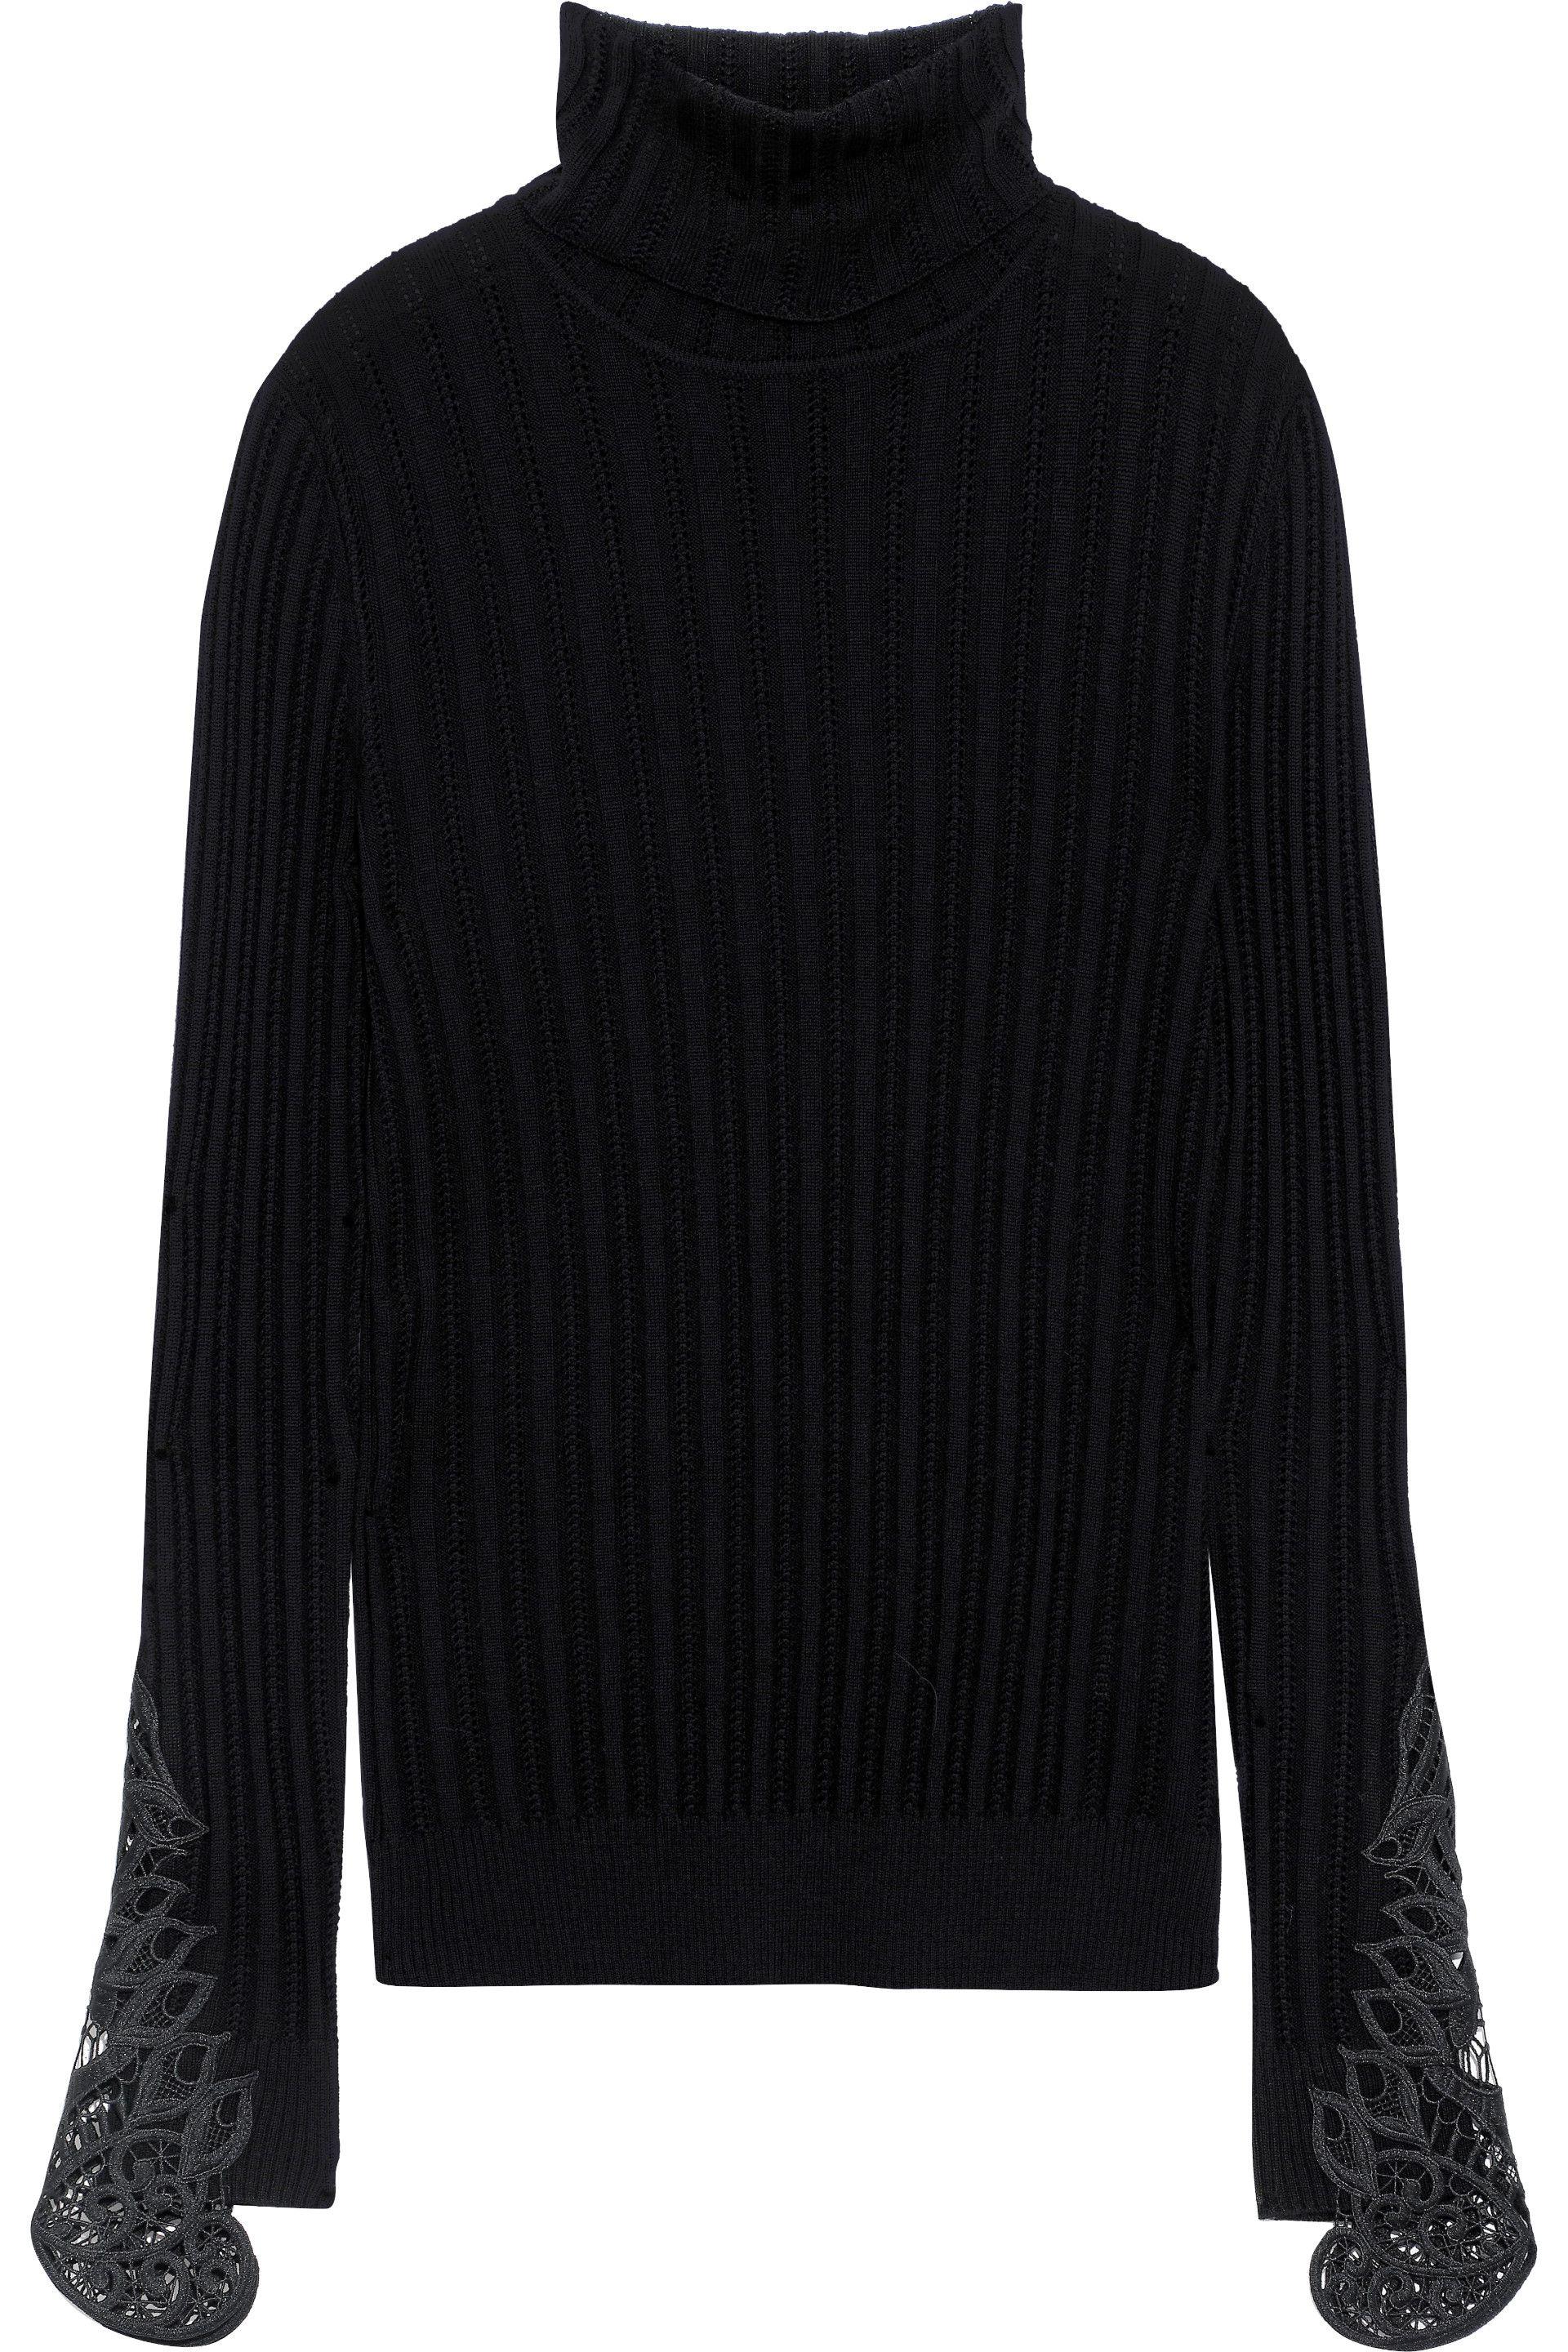 Lyst - Elie Tahari Woman Pointelle-knit Merino Wool Turtleneck Sweater ...